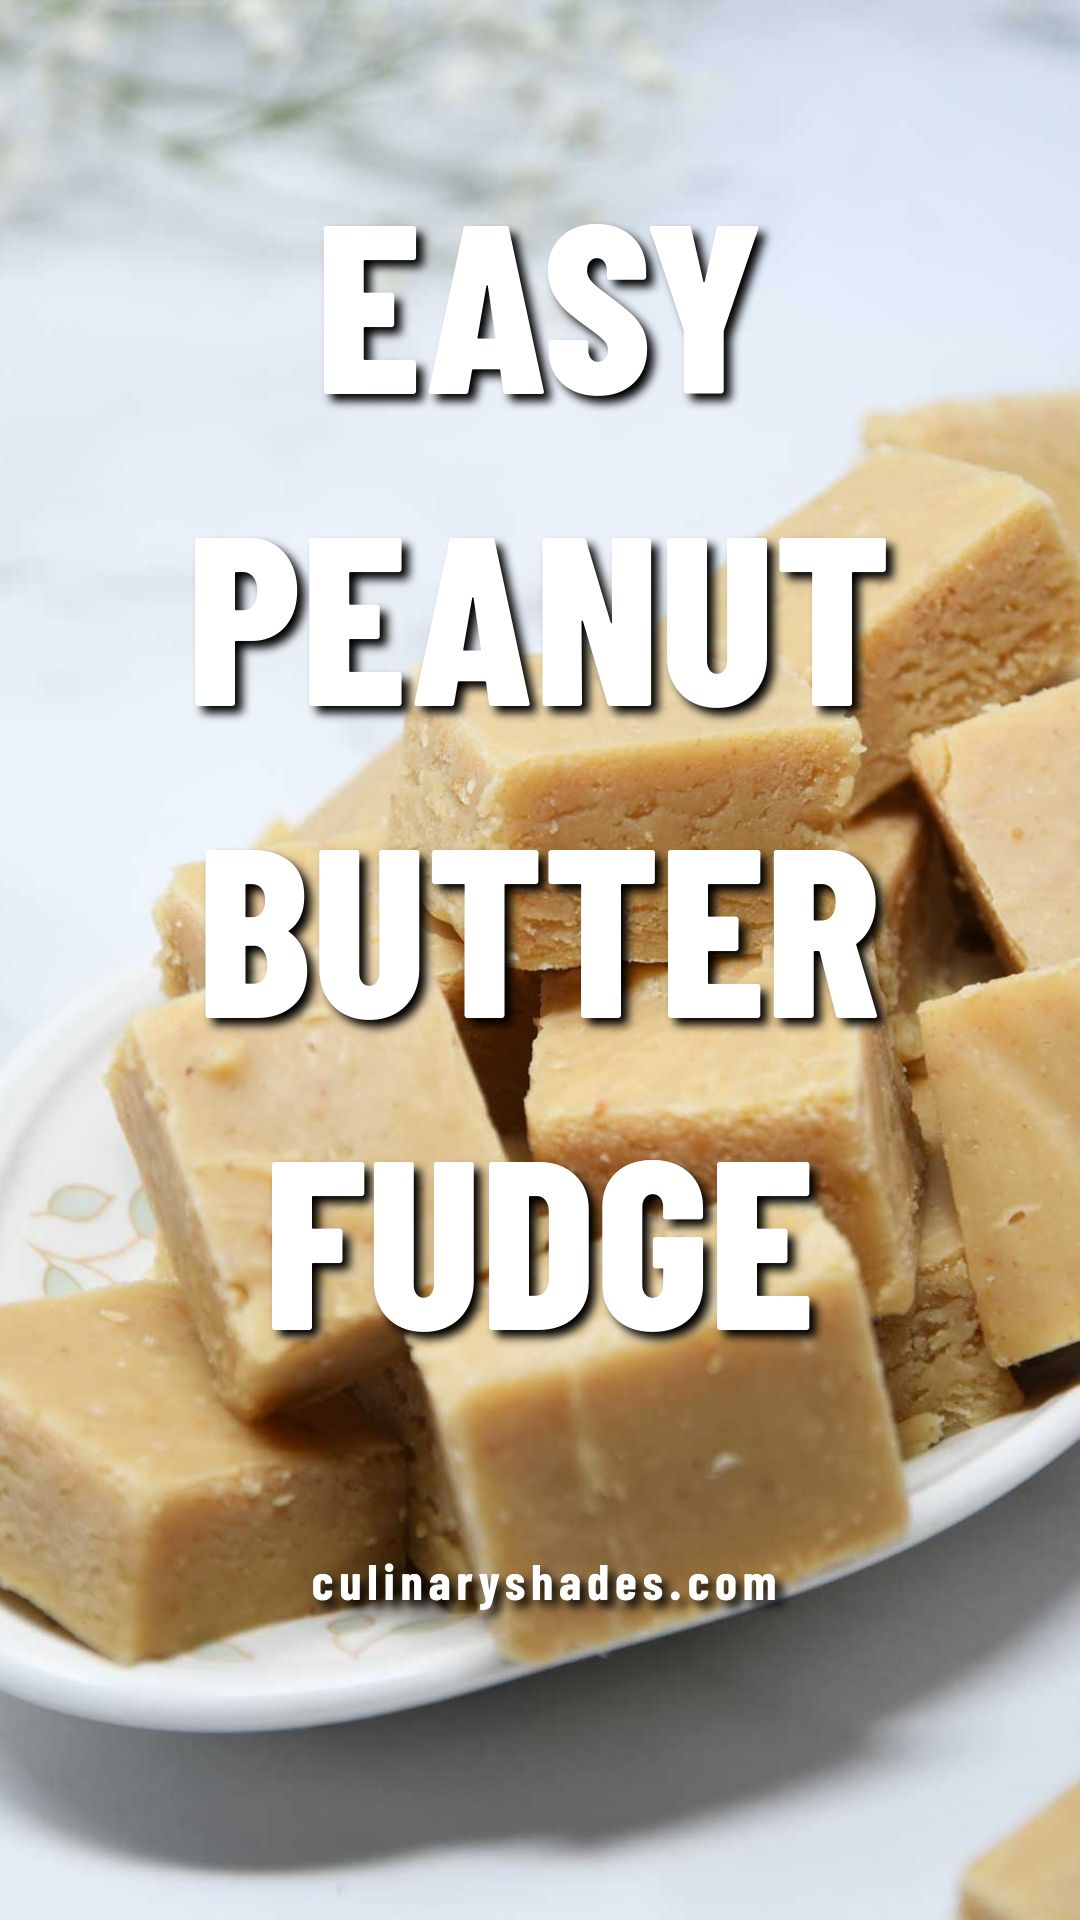 Peanut butter fudge cubes in a plate.